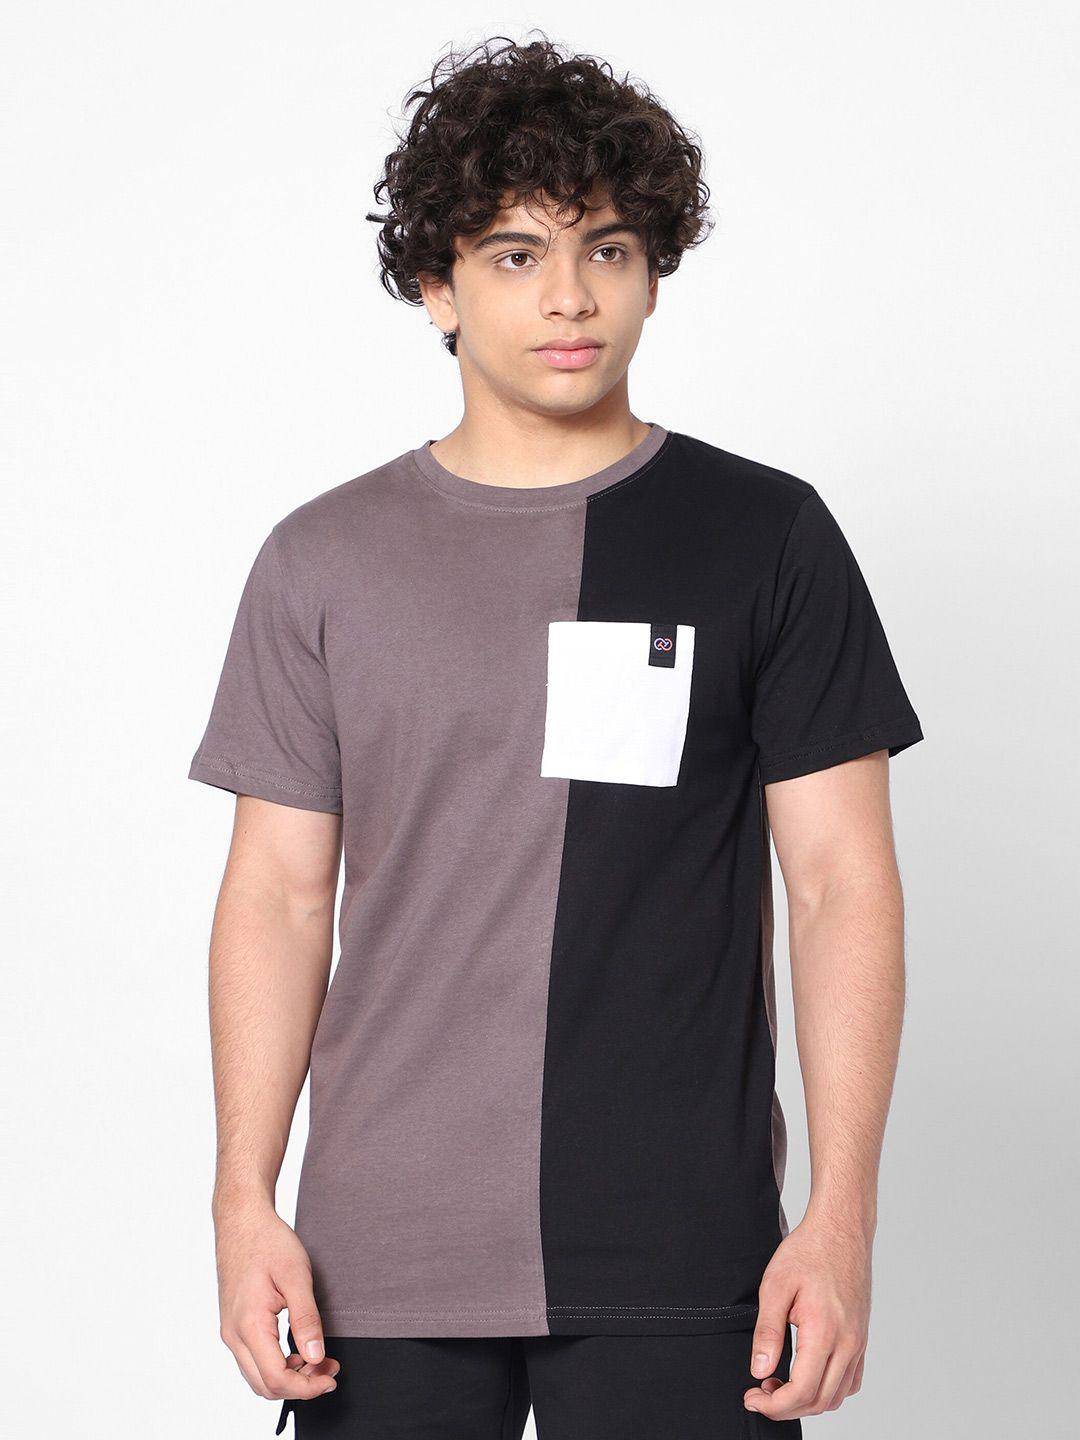 teentrums-boys-colourblocked-cotton-t-shirt